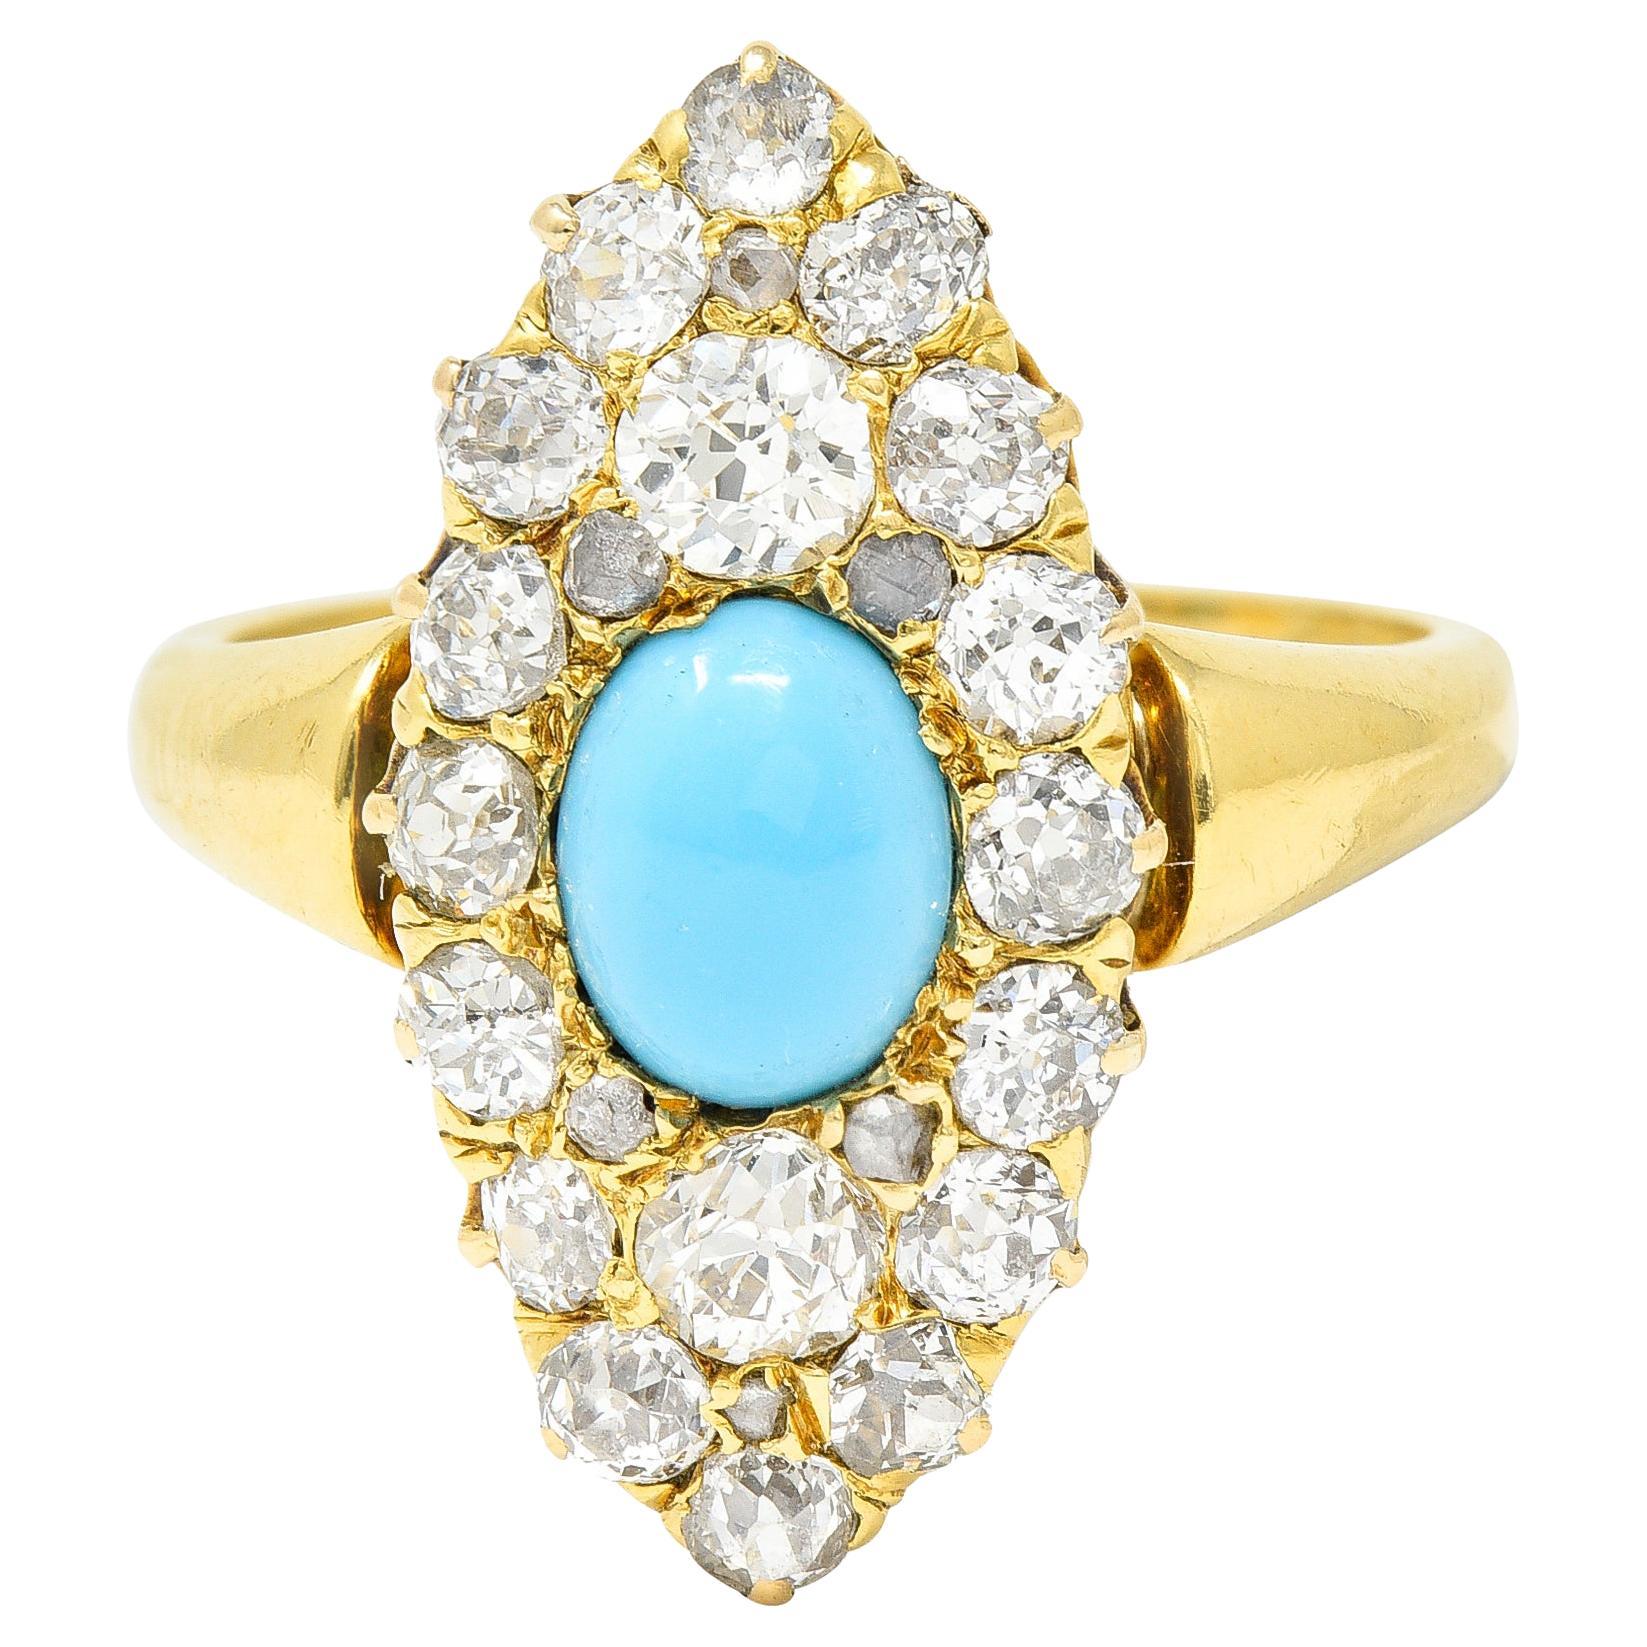 Victorian 1.68 Carat Old European Cut Diamond Turquoise 18 Karat Gold Ring